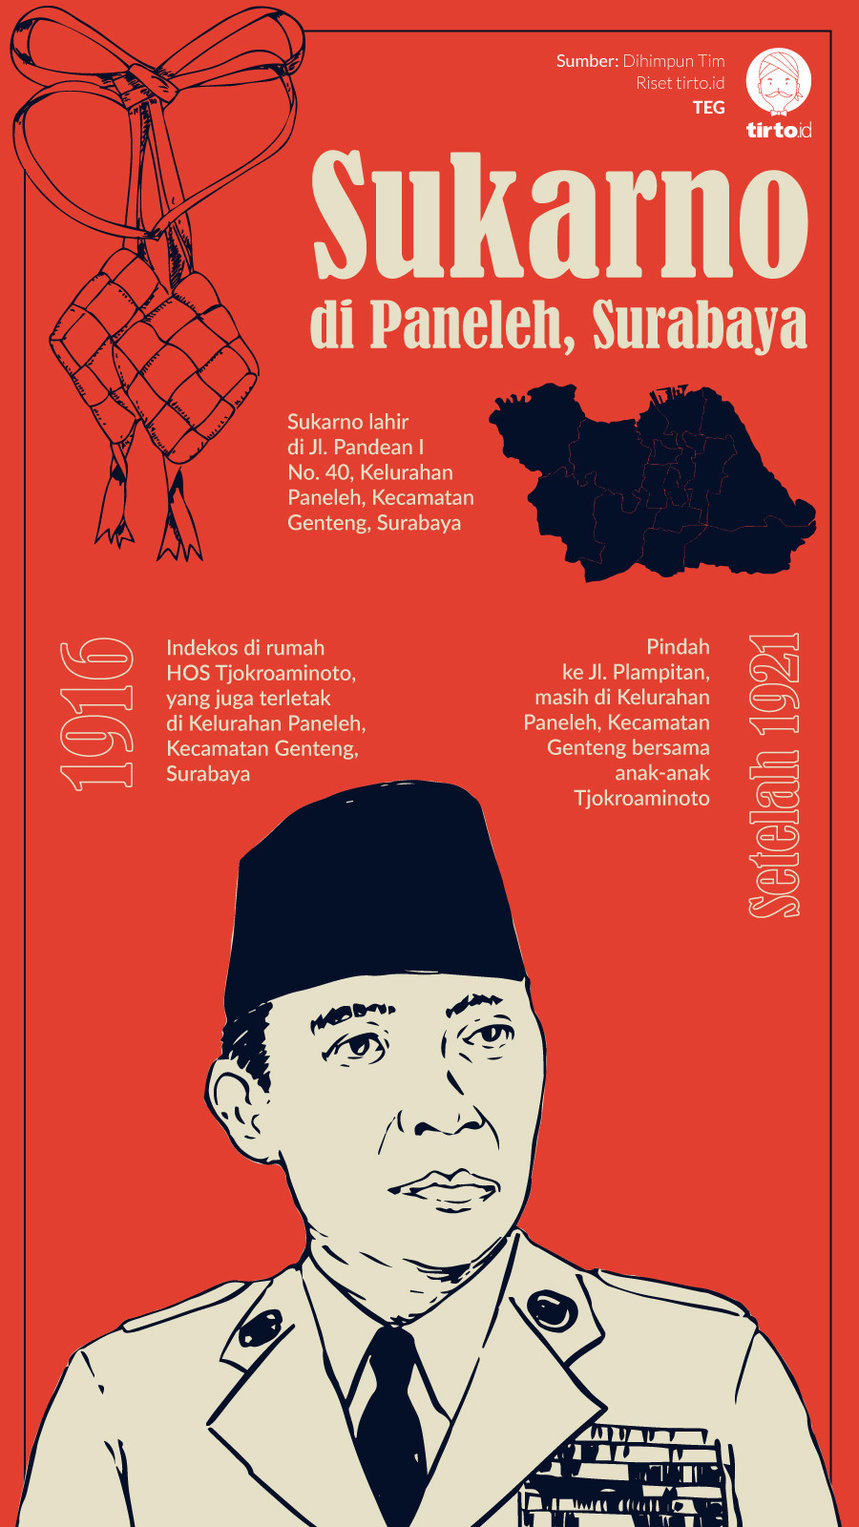 Infografik Sukarno di Paneleh Surabaya